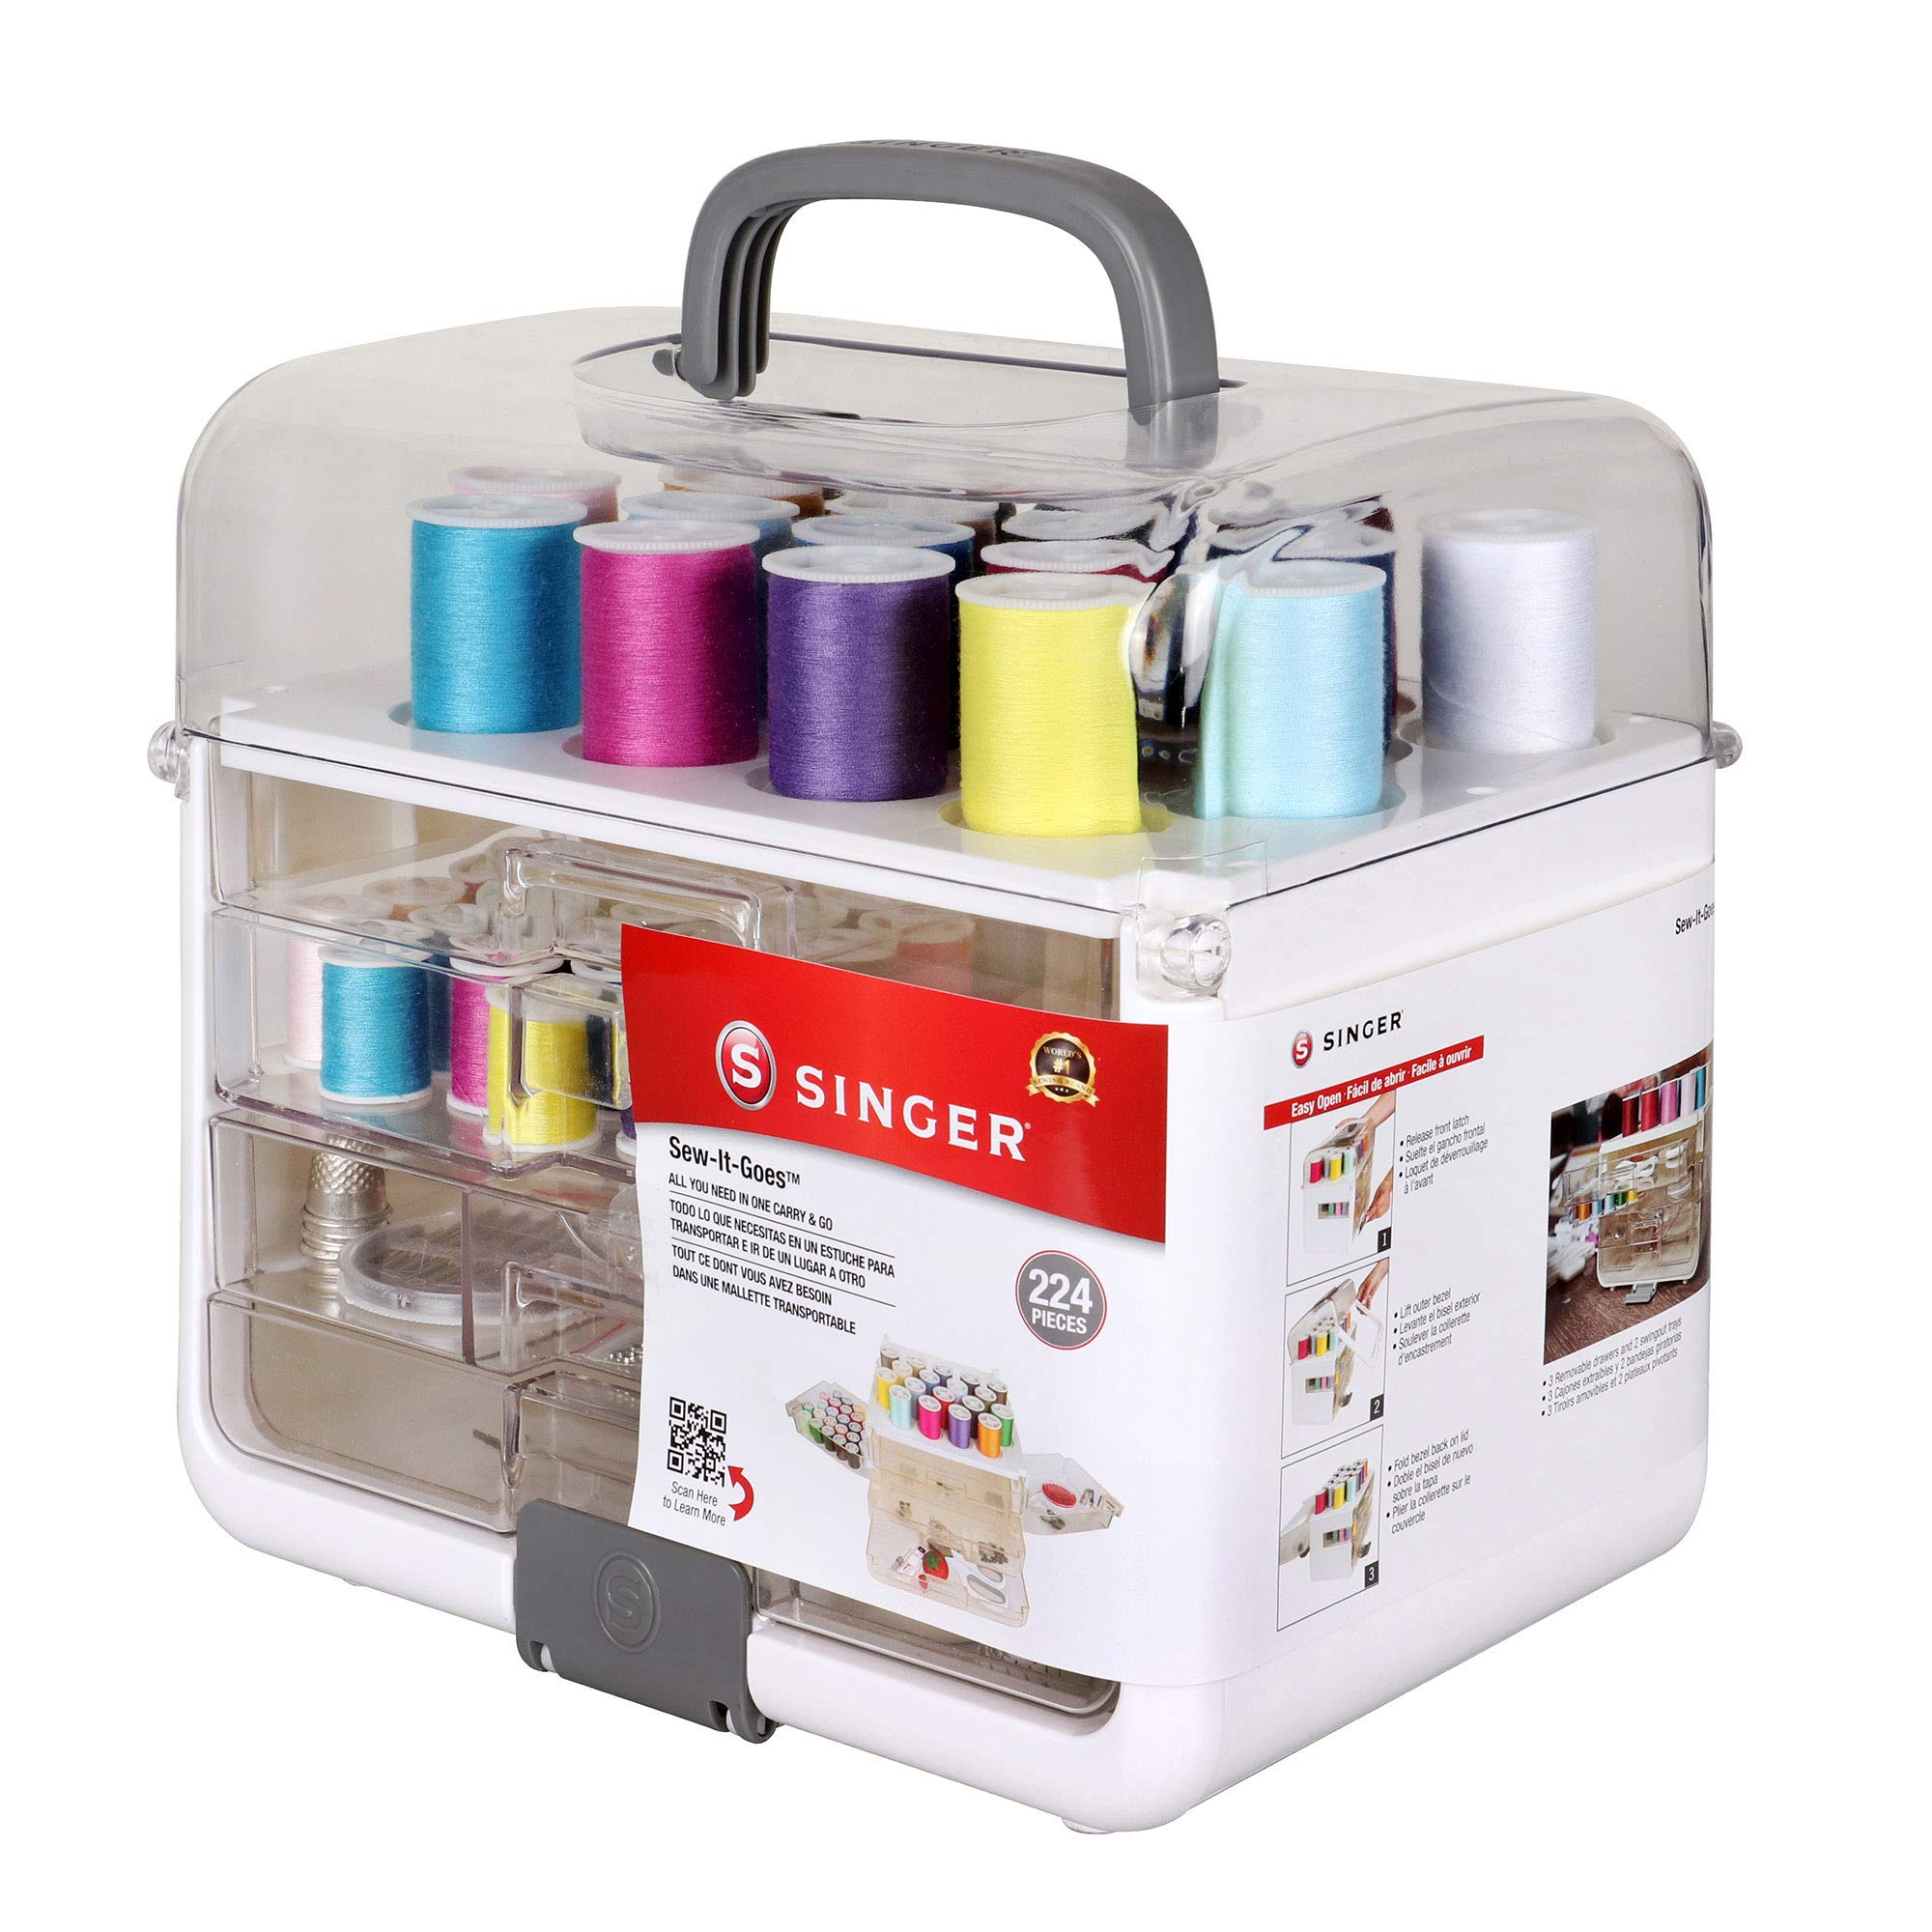 Singer Sew-It-Goes, 224 Piece - Sewing Kit & Craft Organizer - Sewing Case Storage with Machine Sewing Thread, White